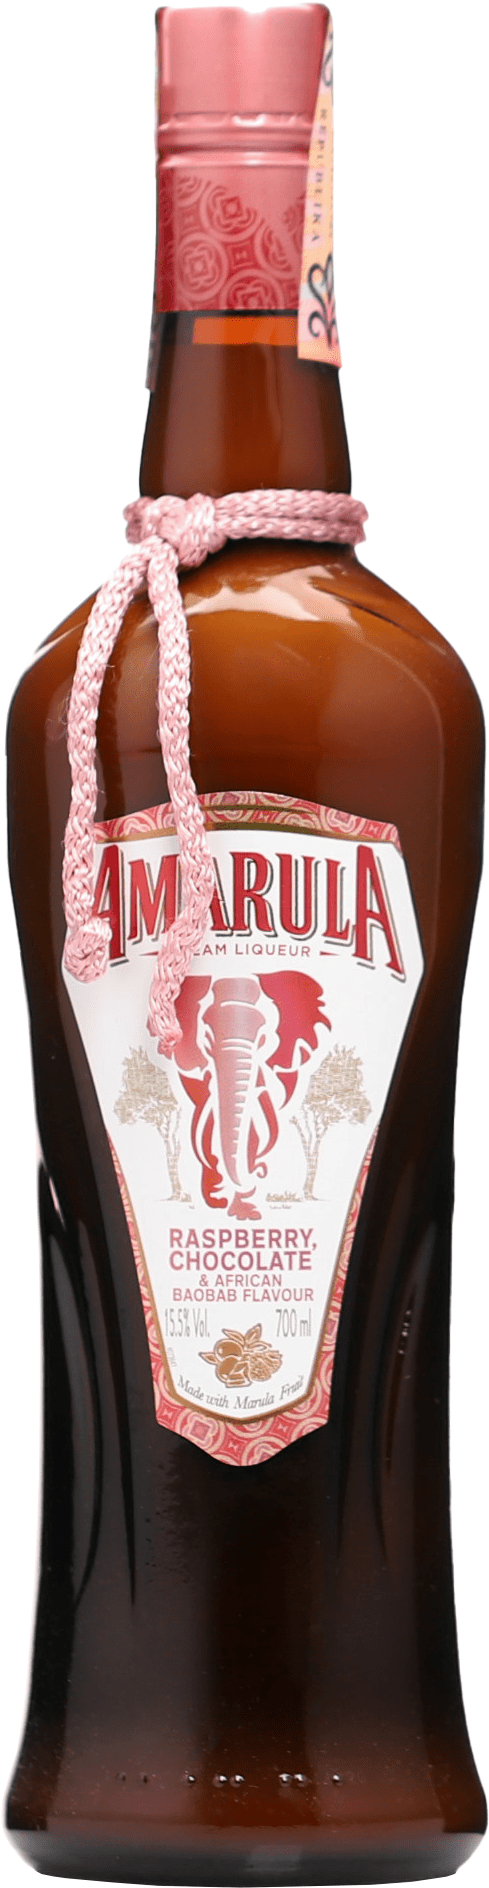 Amarula Raspberry & Chocolate - Chocolate liqueurs | Bondston